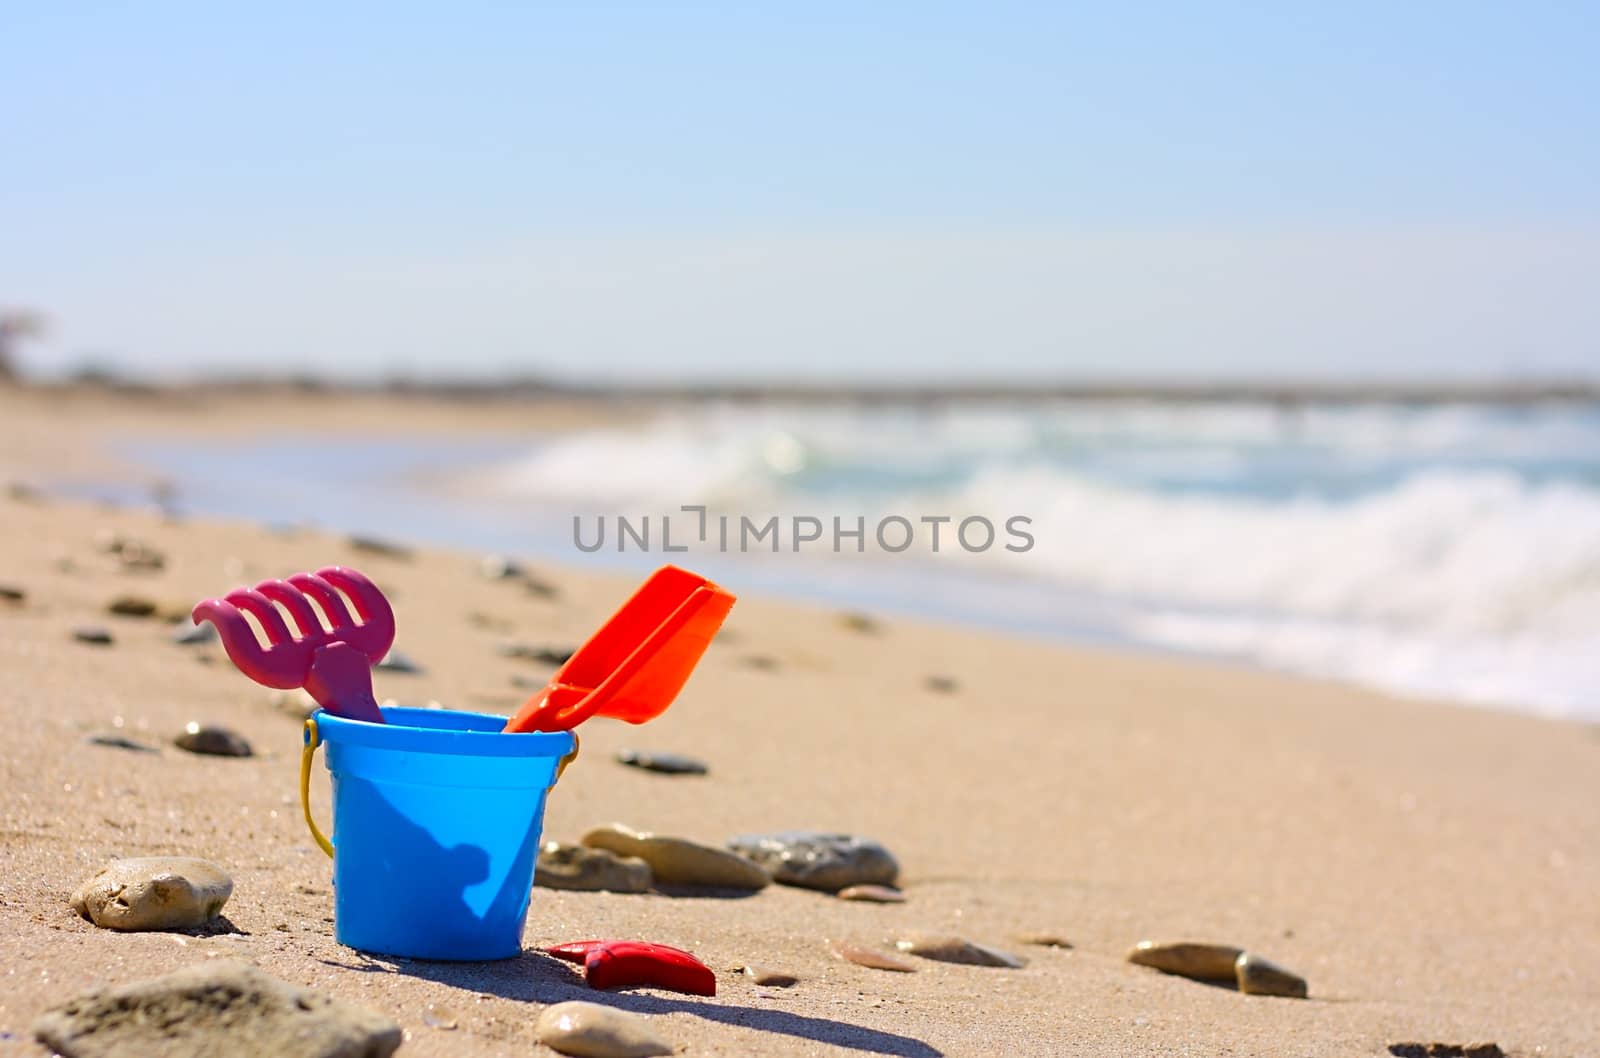 Plastic bucket on the beach by dedmorozz